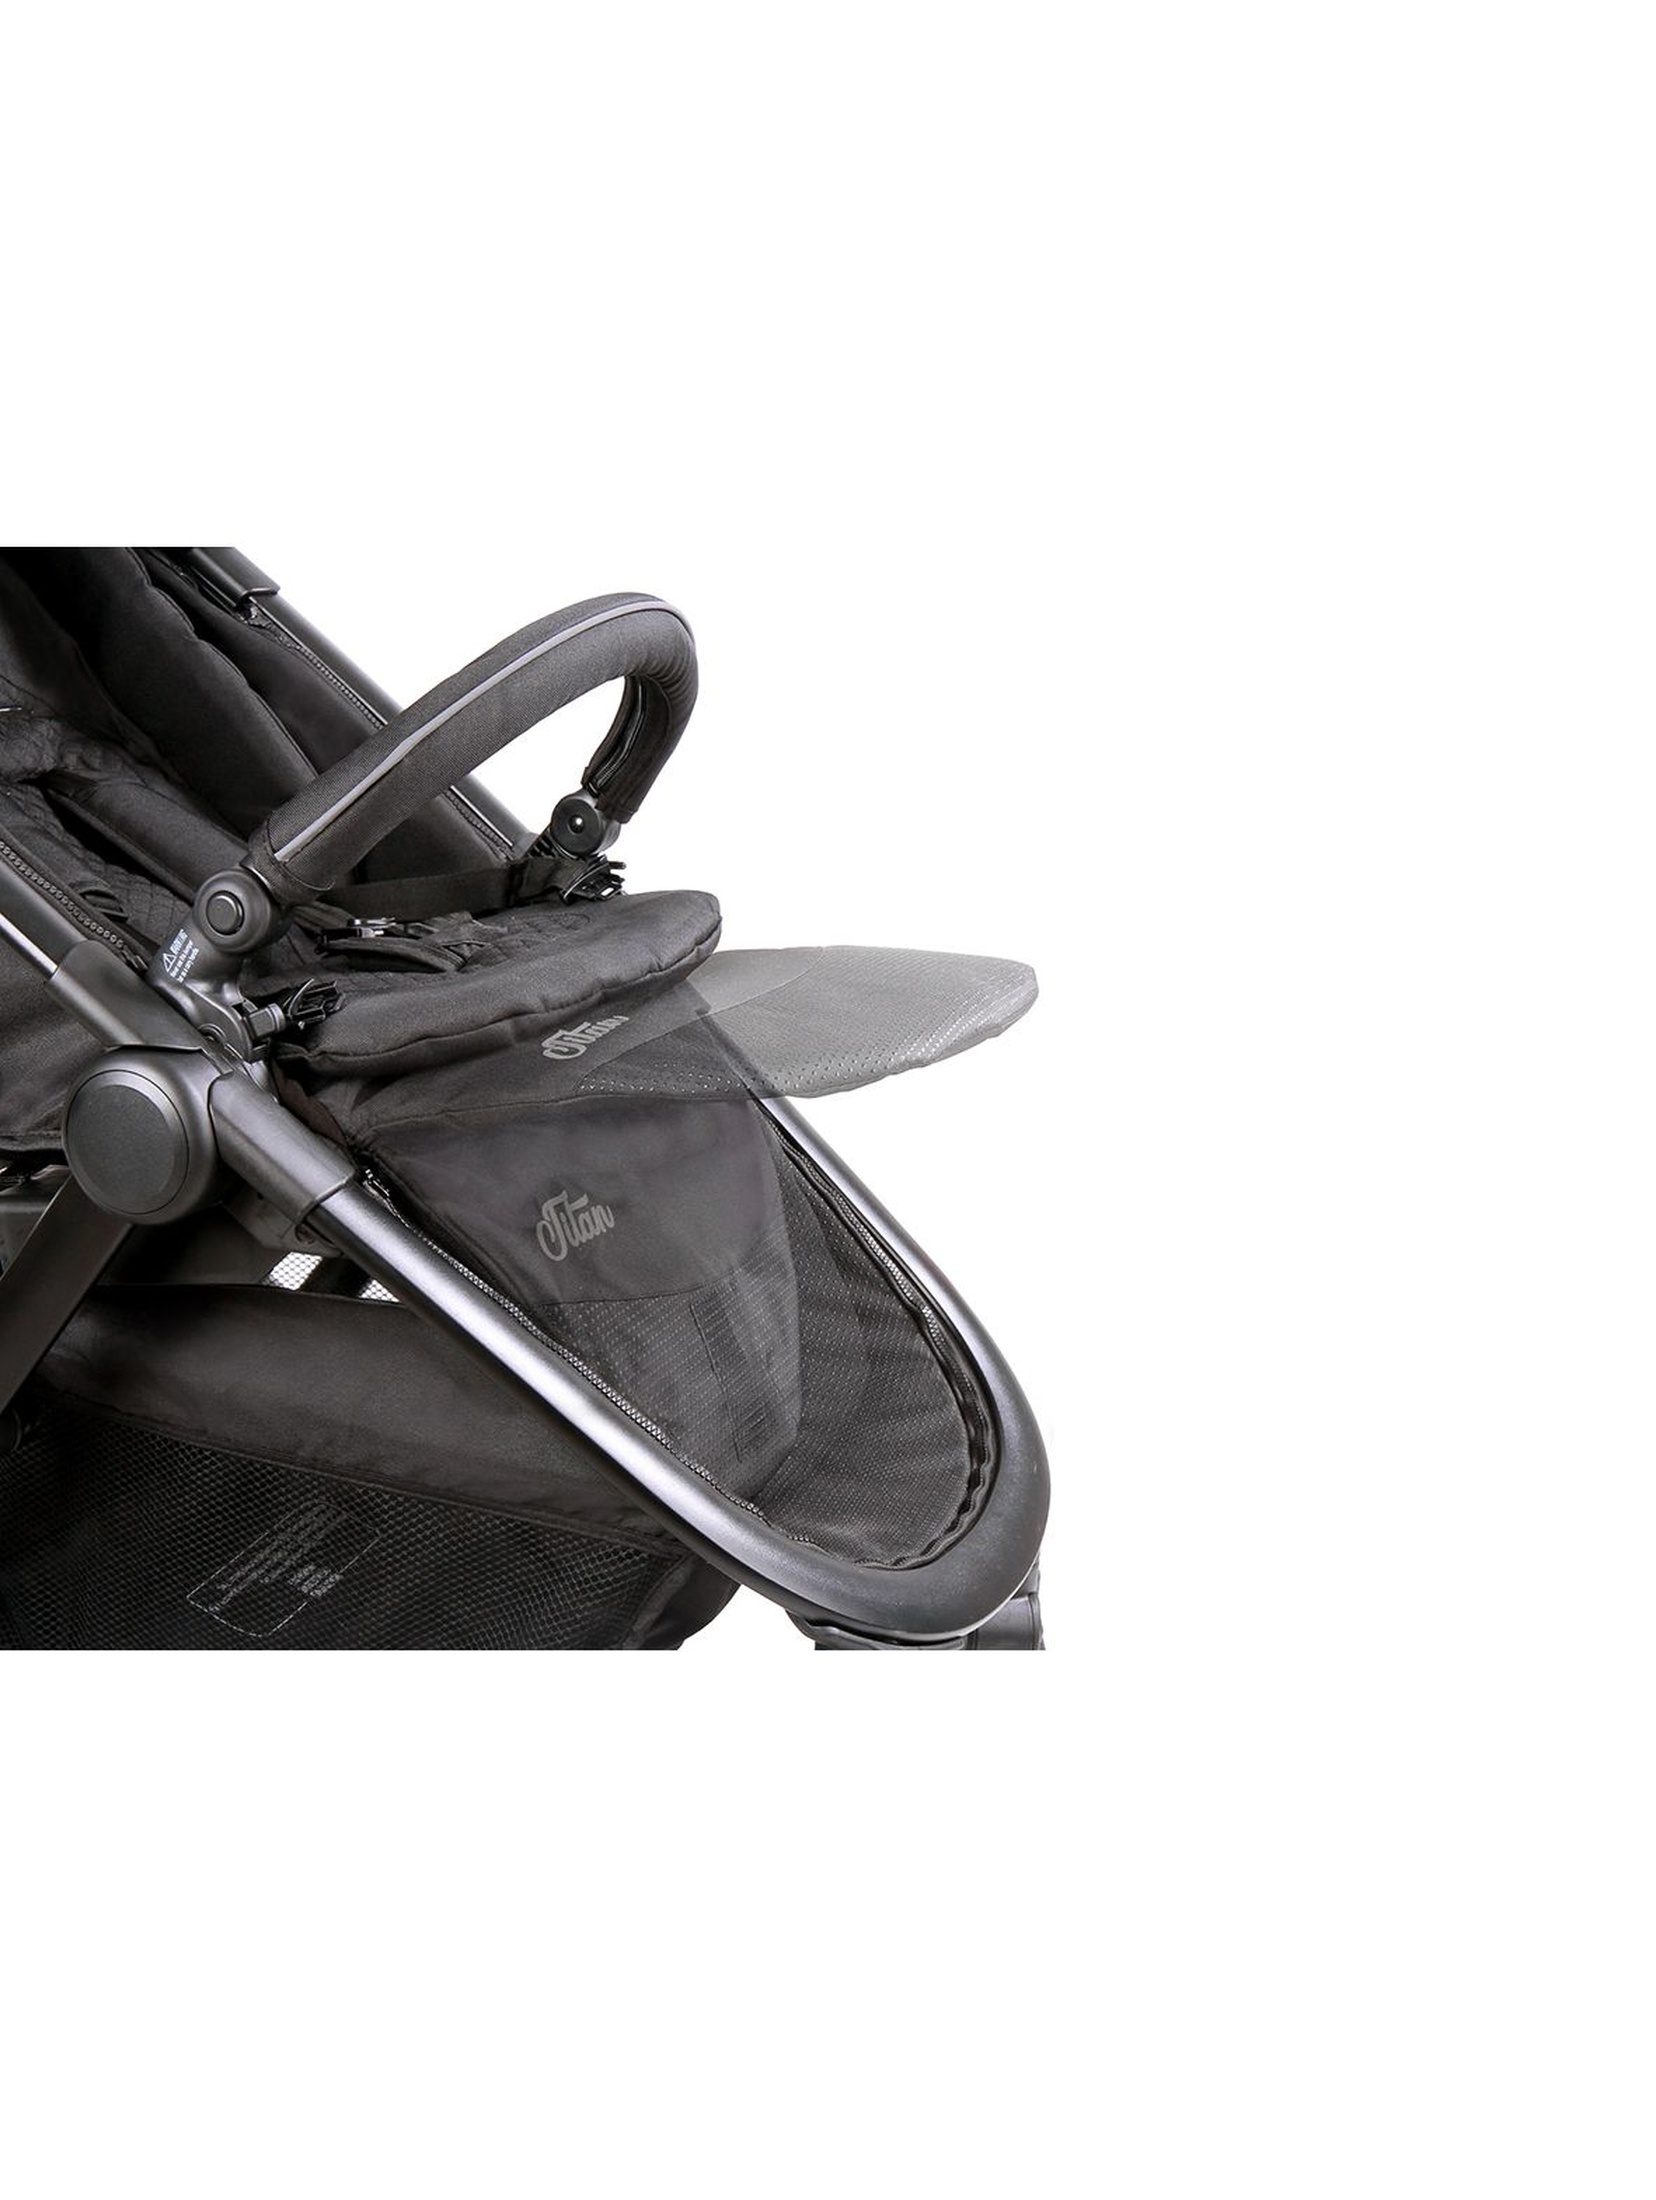 Wózek spacerowy TITAN BLACK do 15kg